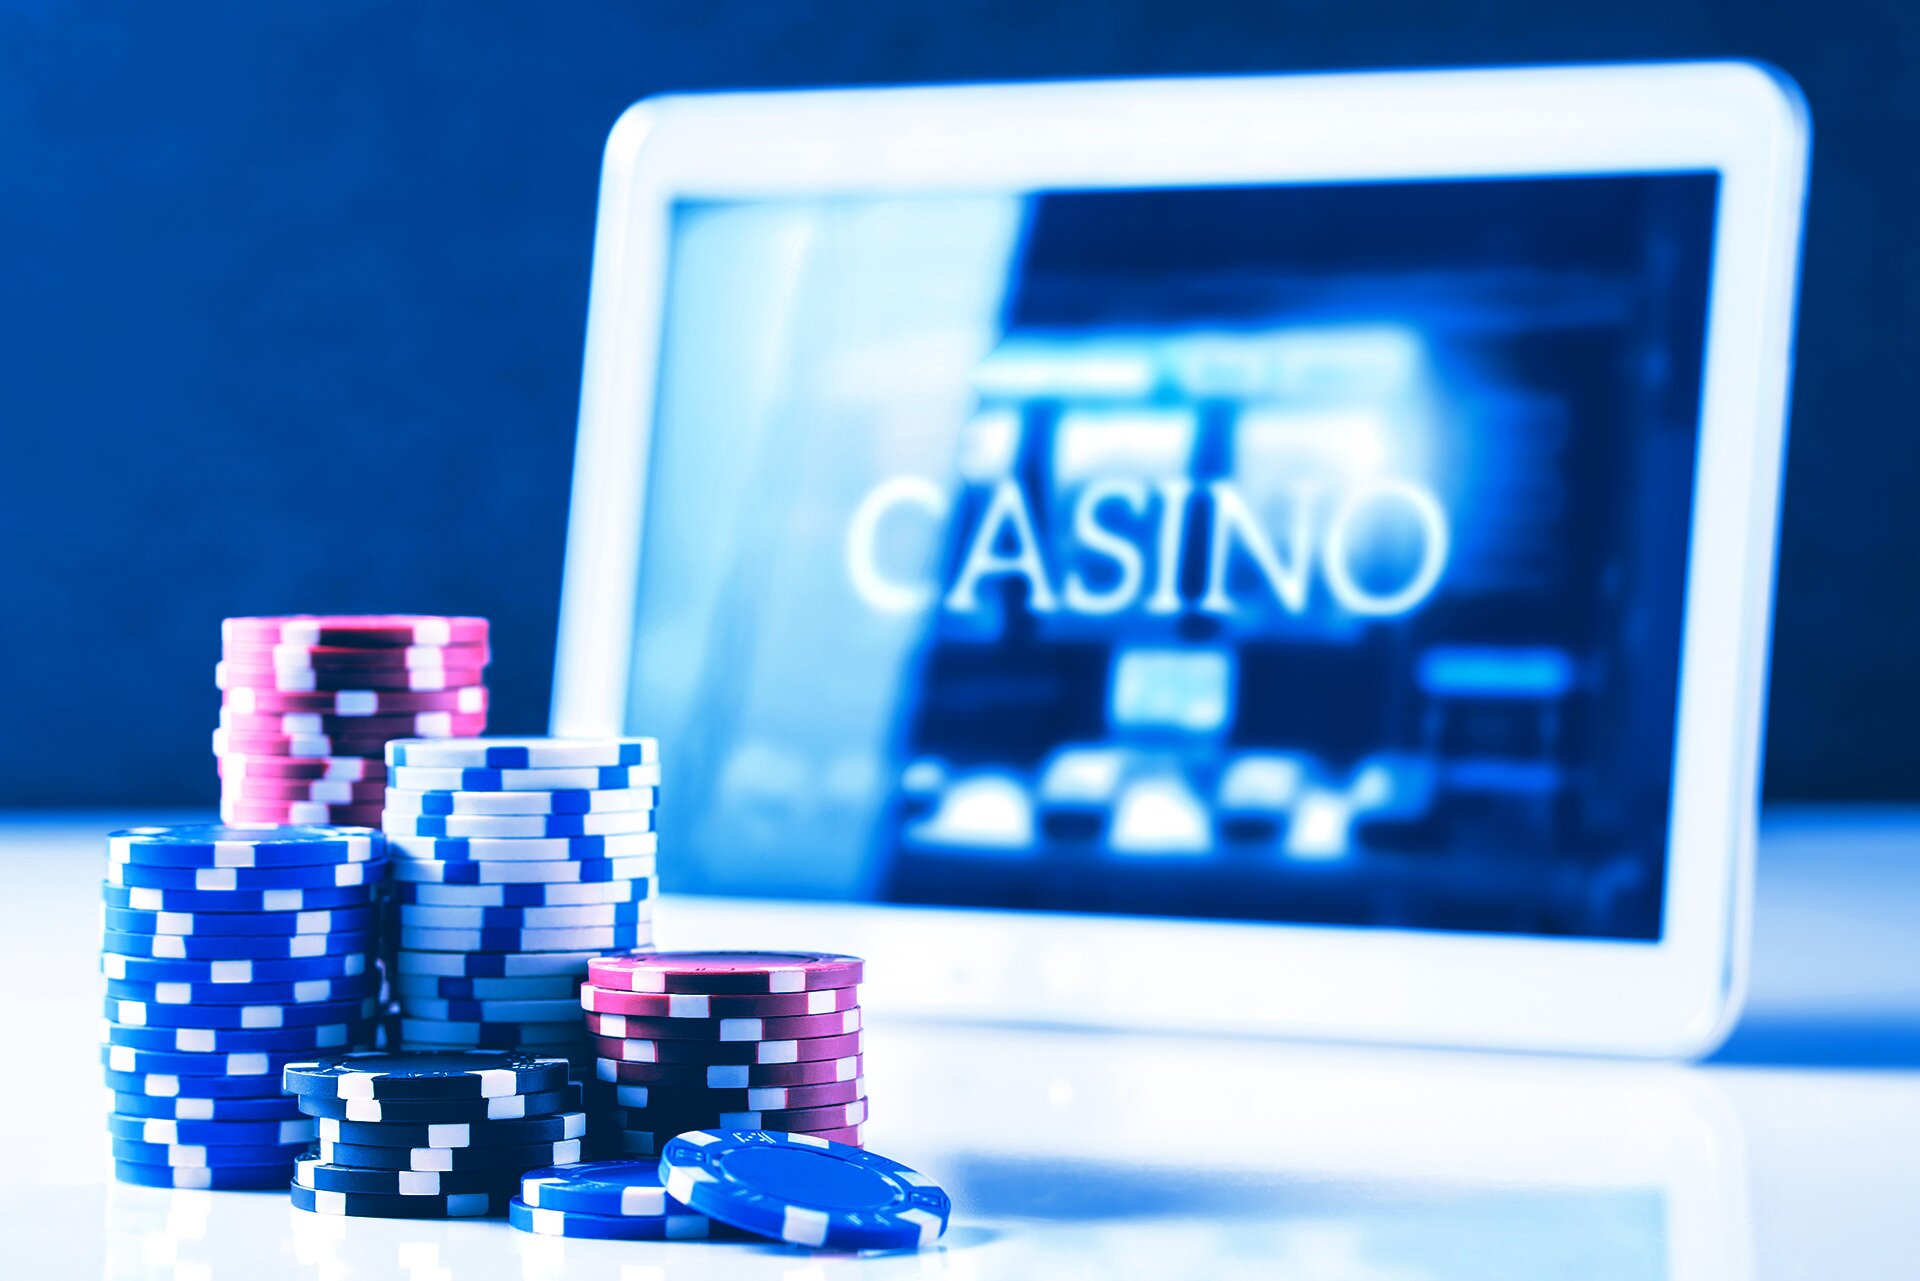 best australian online casinos real money